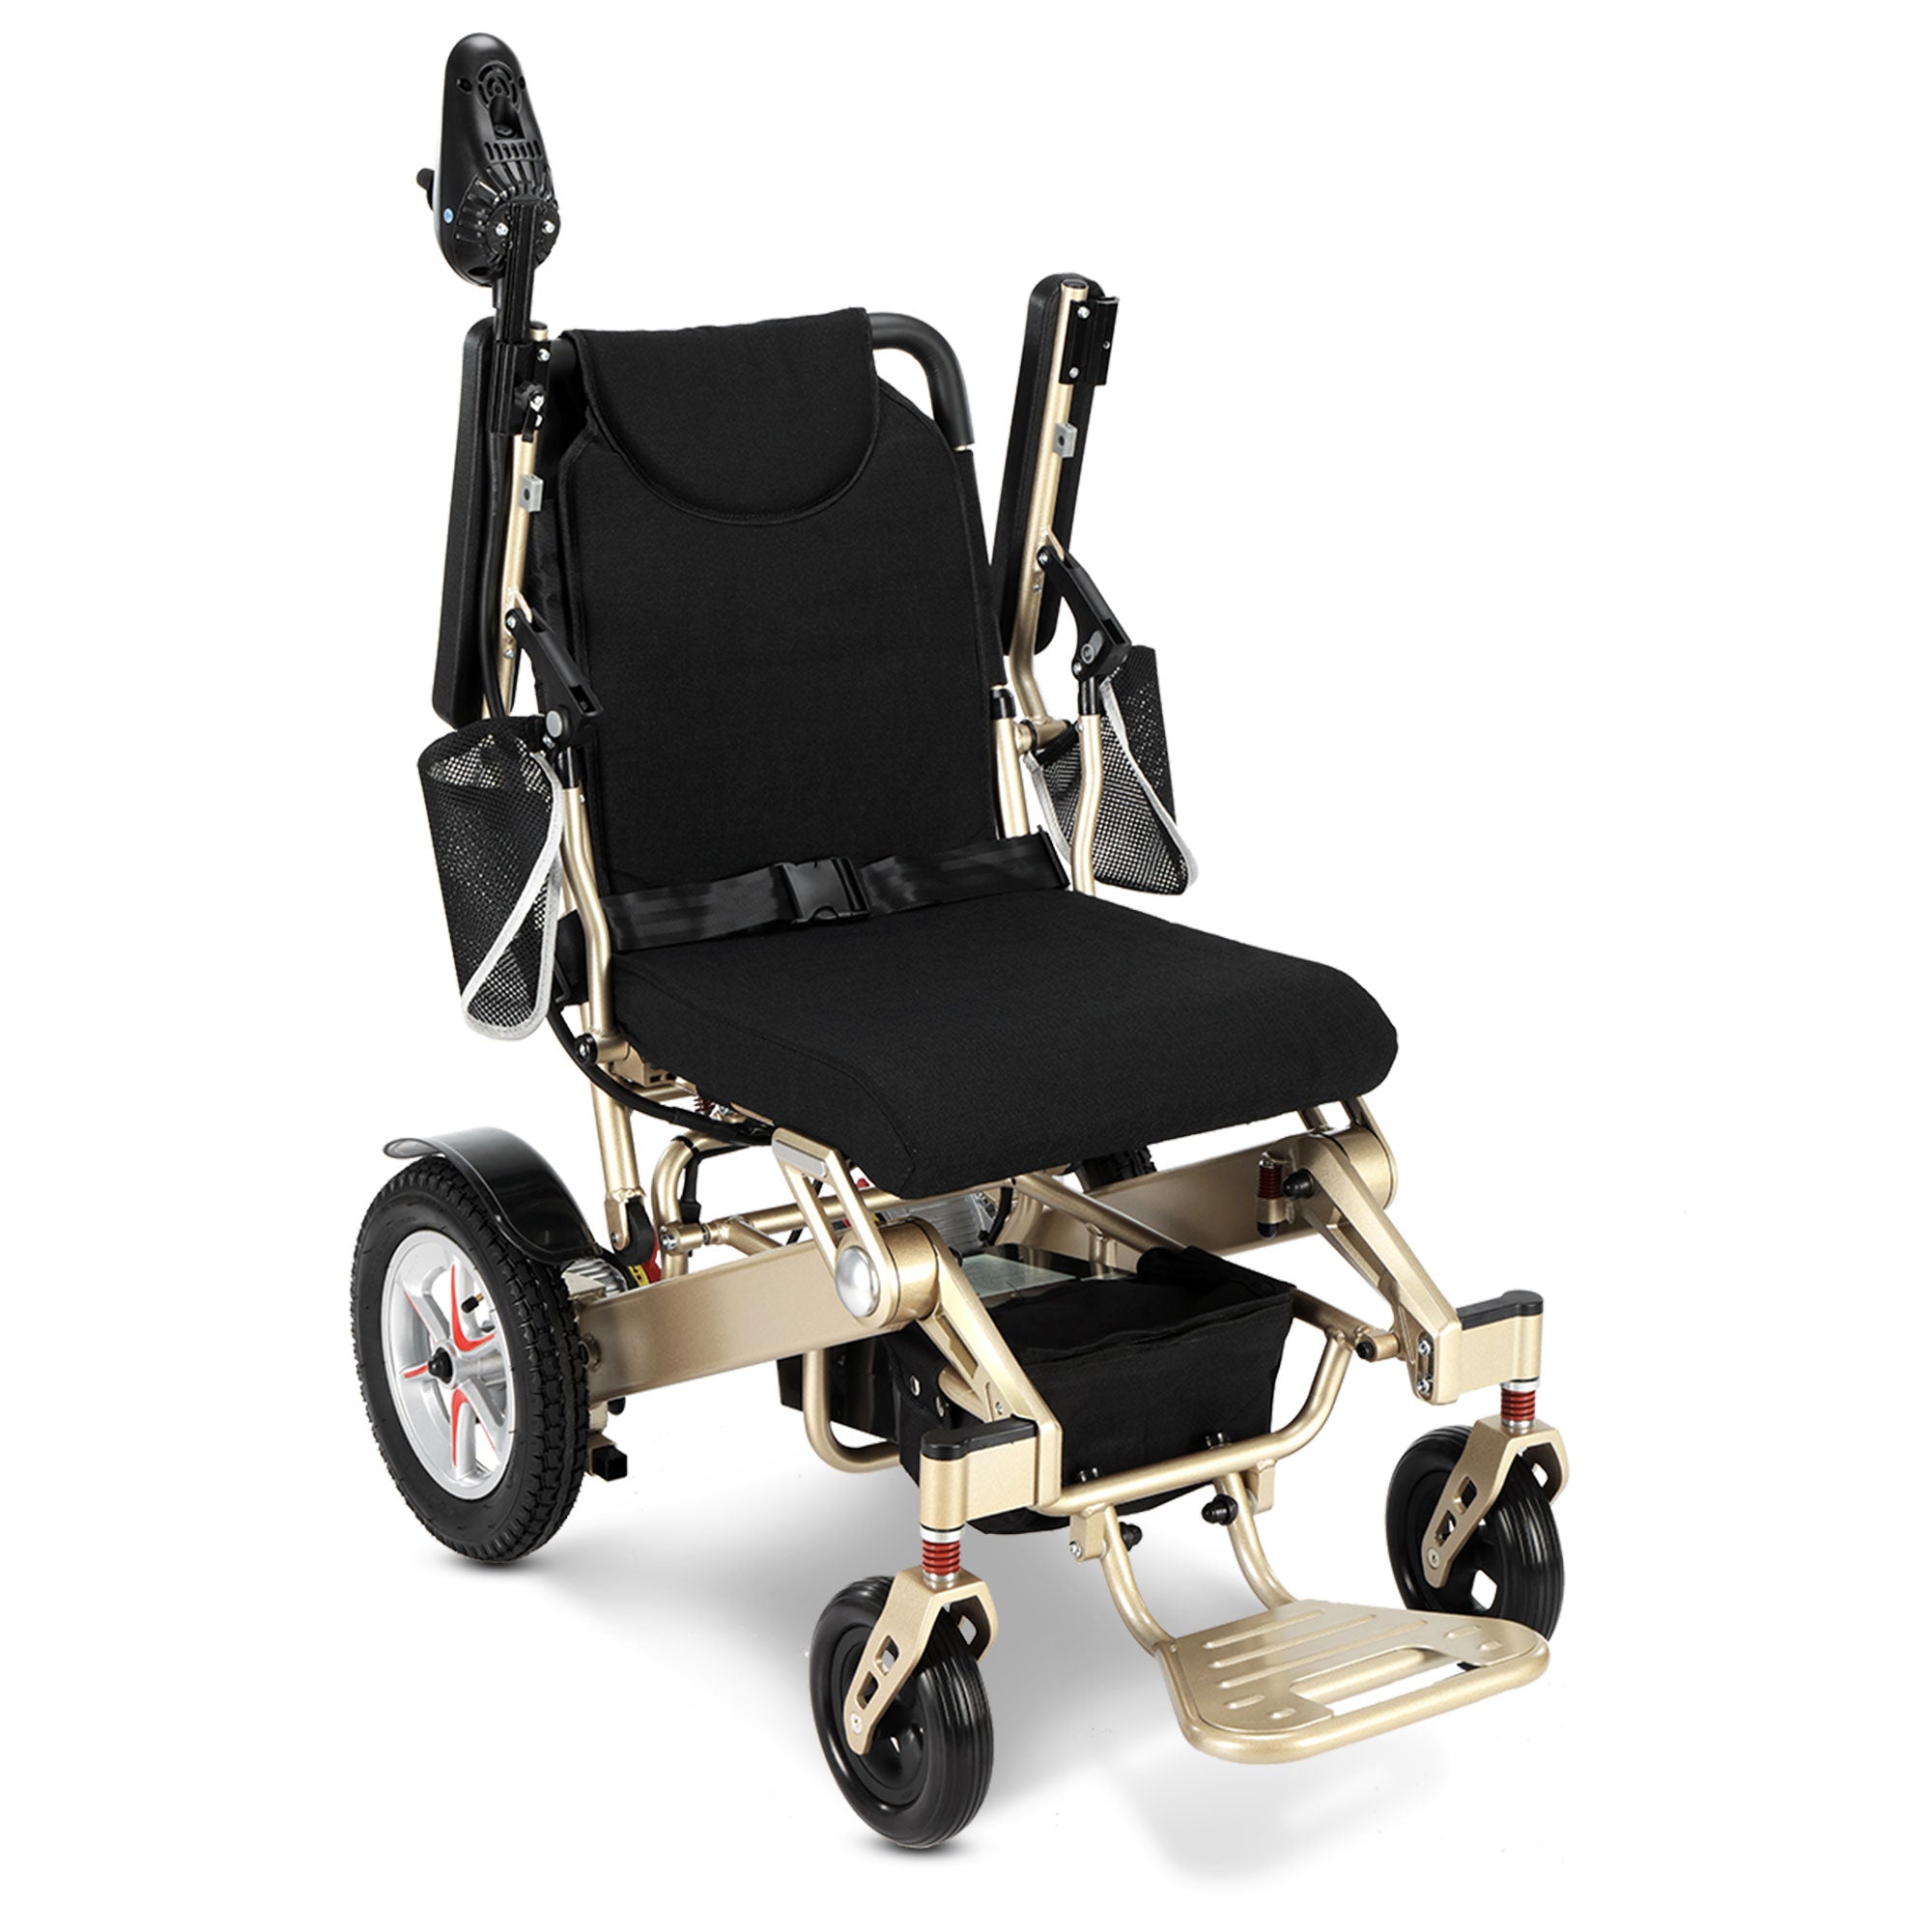 Rubicon DX09 - Deluxe Long-Range Electric Wheelchair